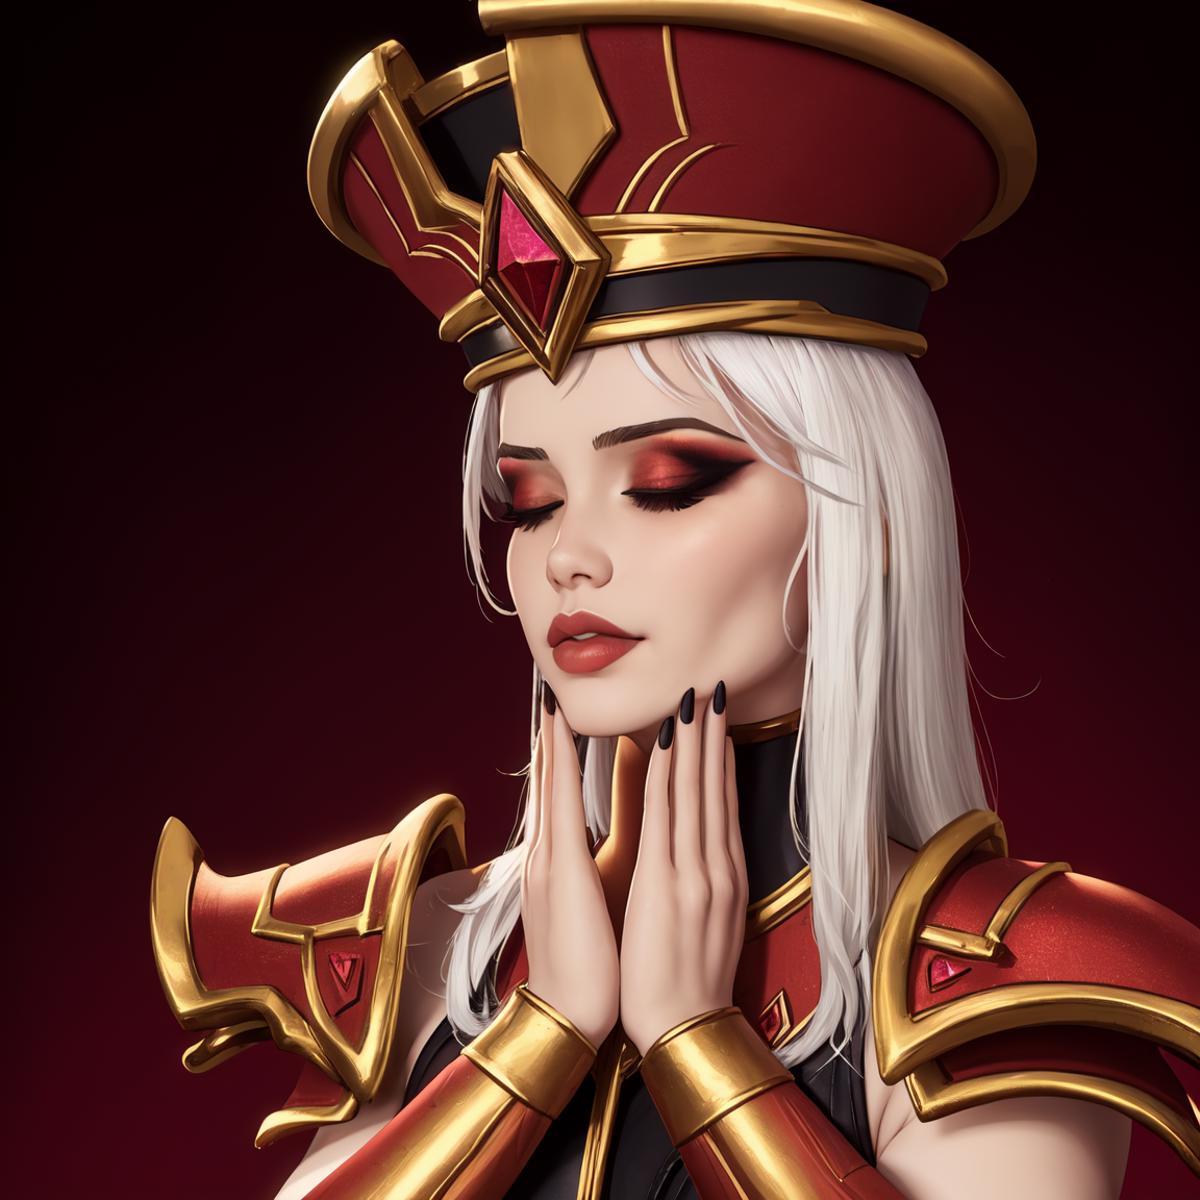 Sally Whitemane (High Inquisitor) World of Warcraft (SFW / NSFW) image by Enigmata